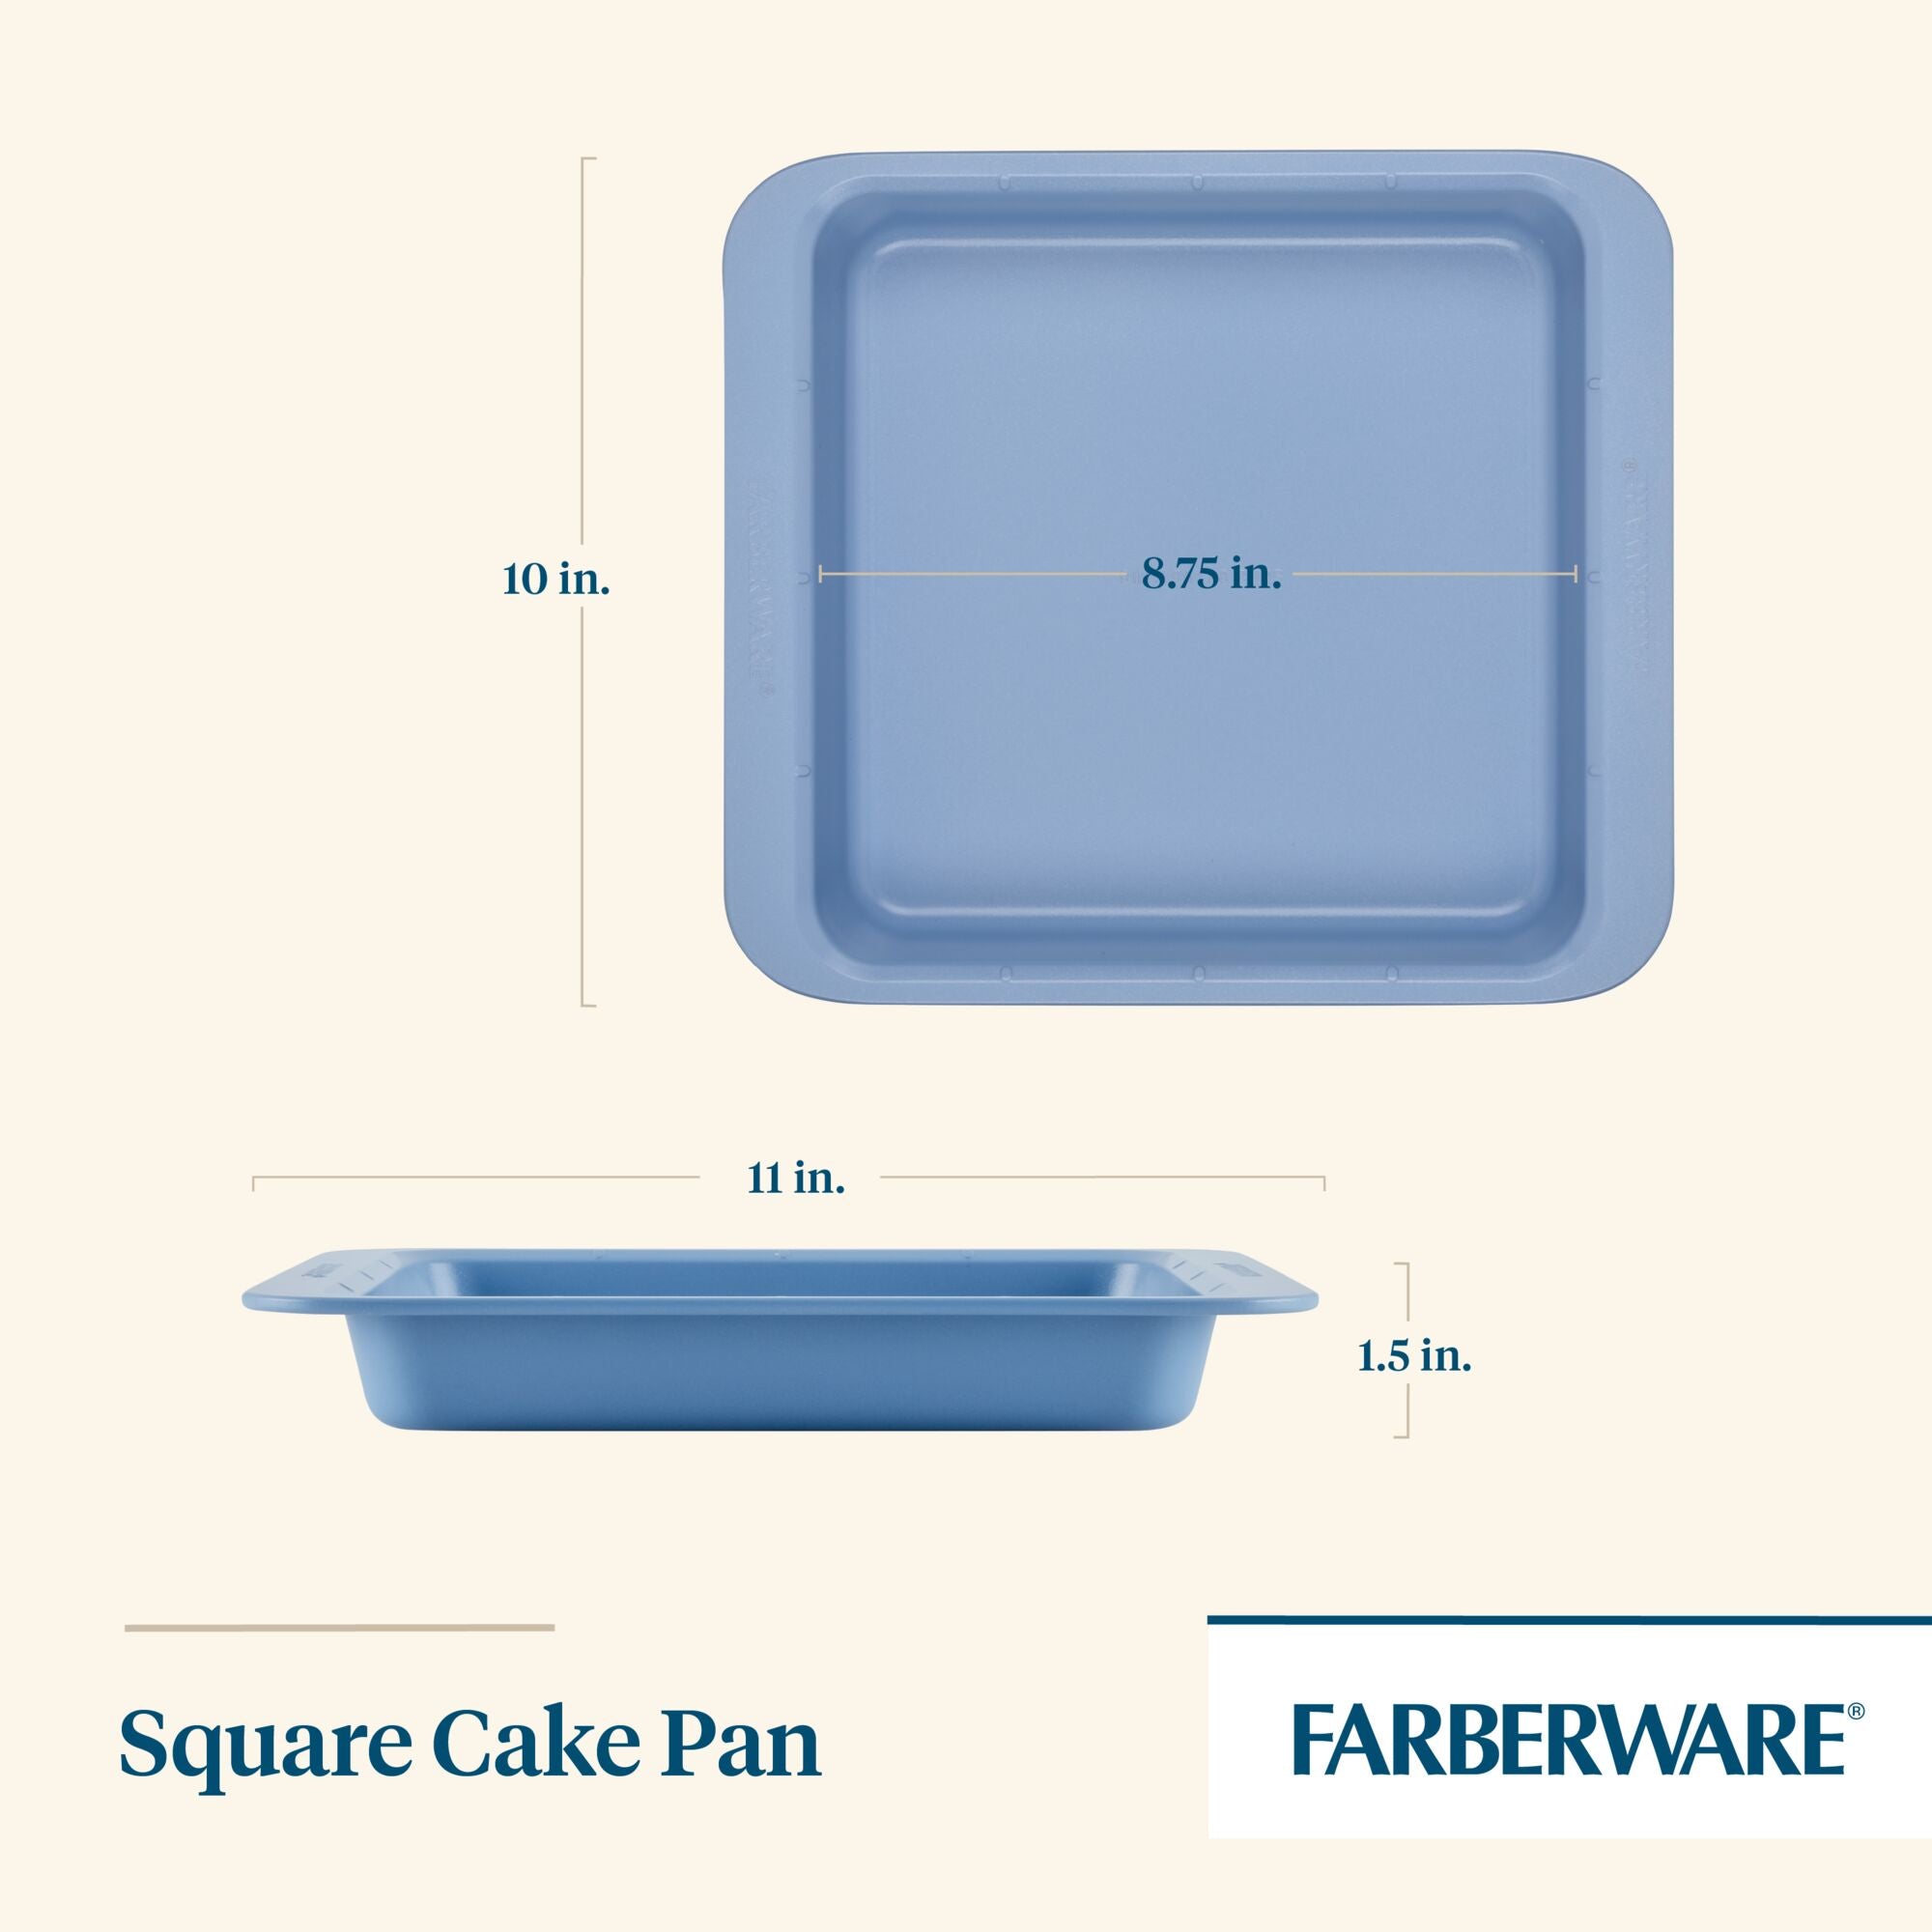 Farberware GoldenBake Bakeware Nonstick Rectangular Cake Pan with Lid, 9-Inch x 13-Inch, Gray